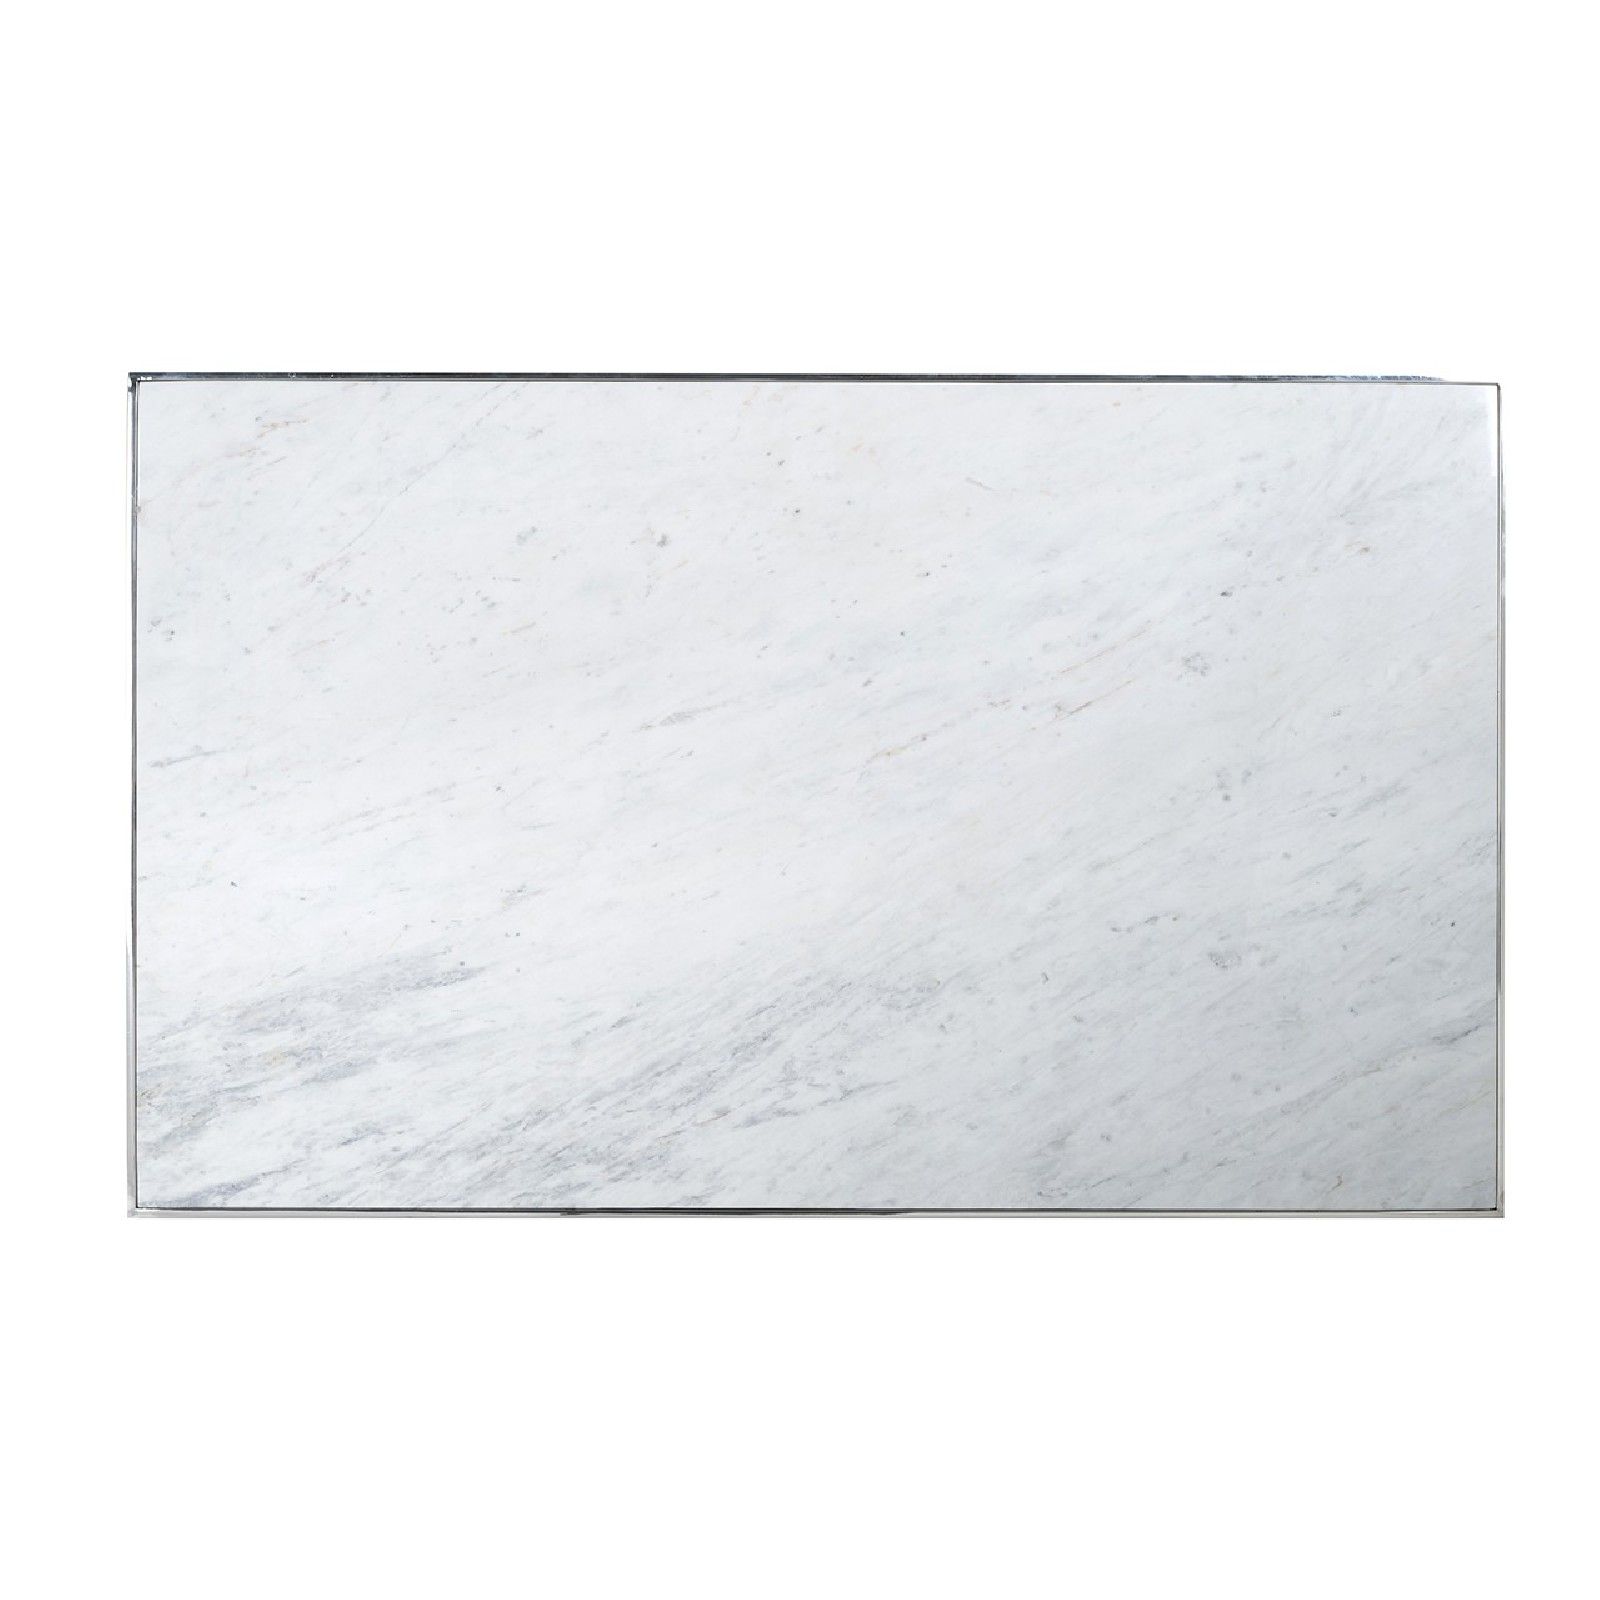 Table basse rectangulaire - Inox et marbre blanc 